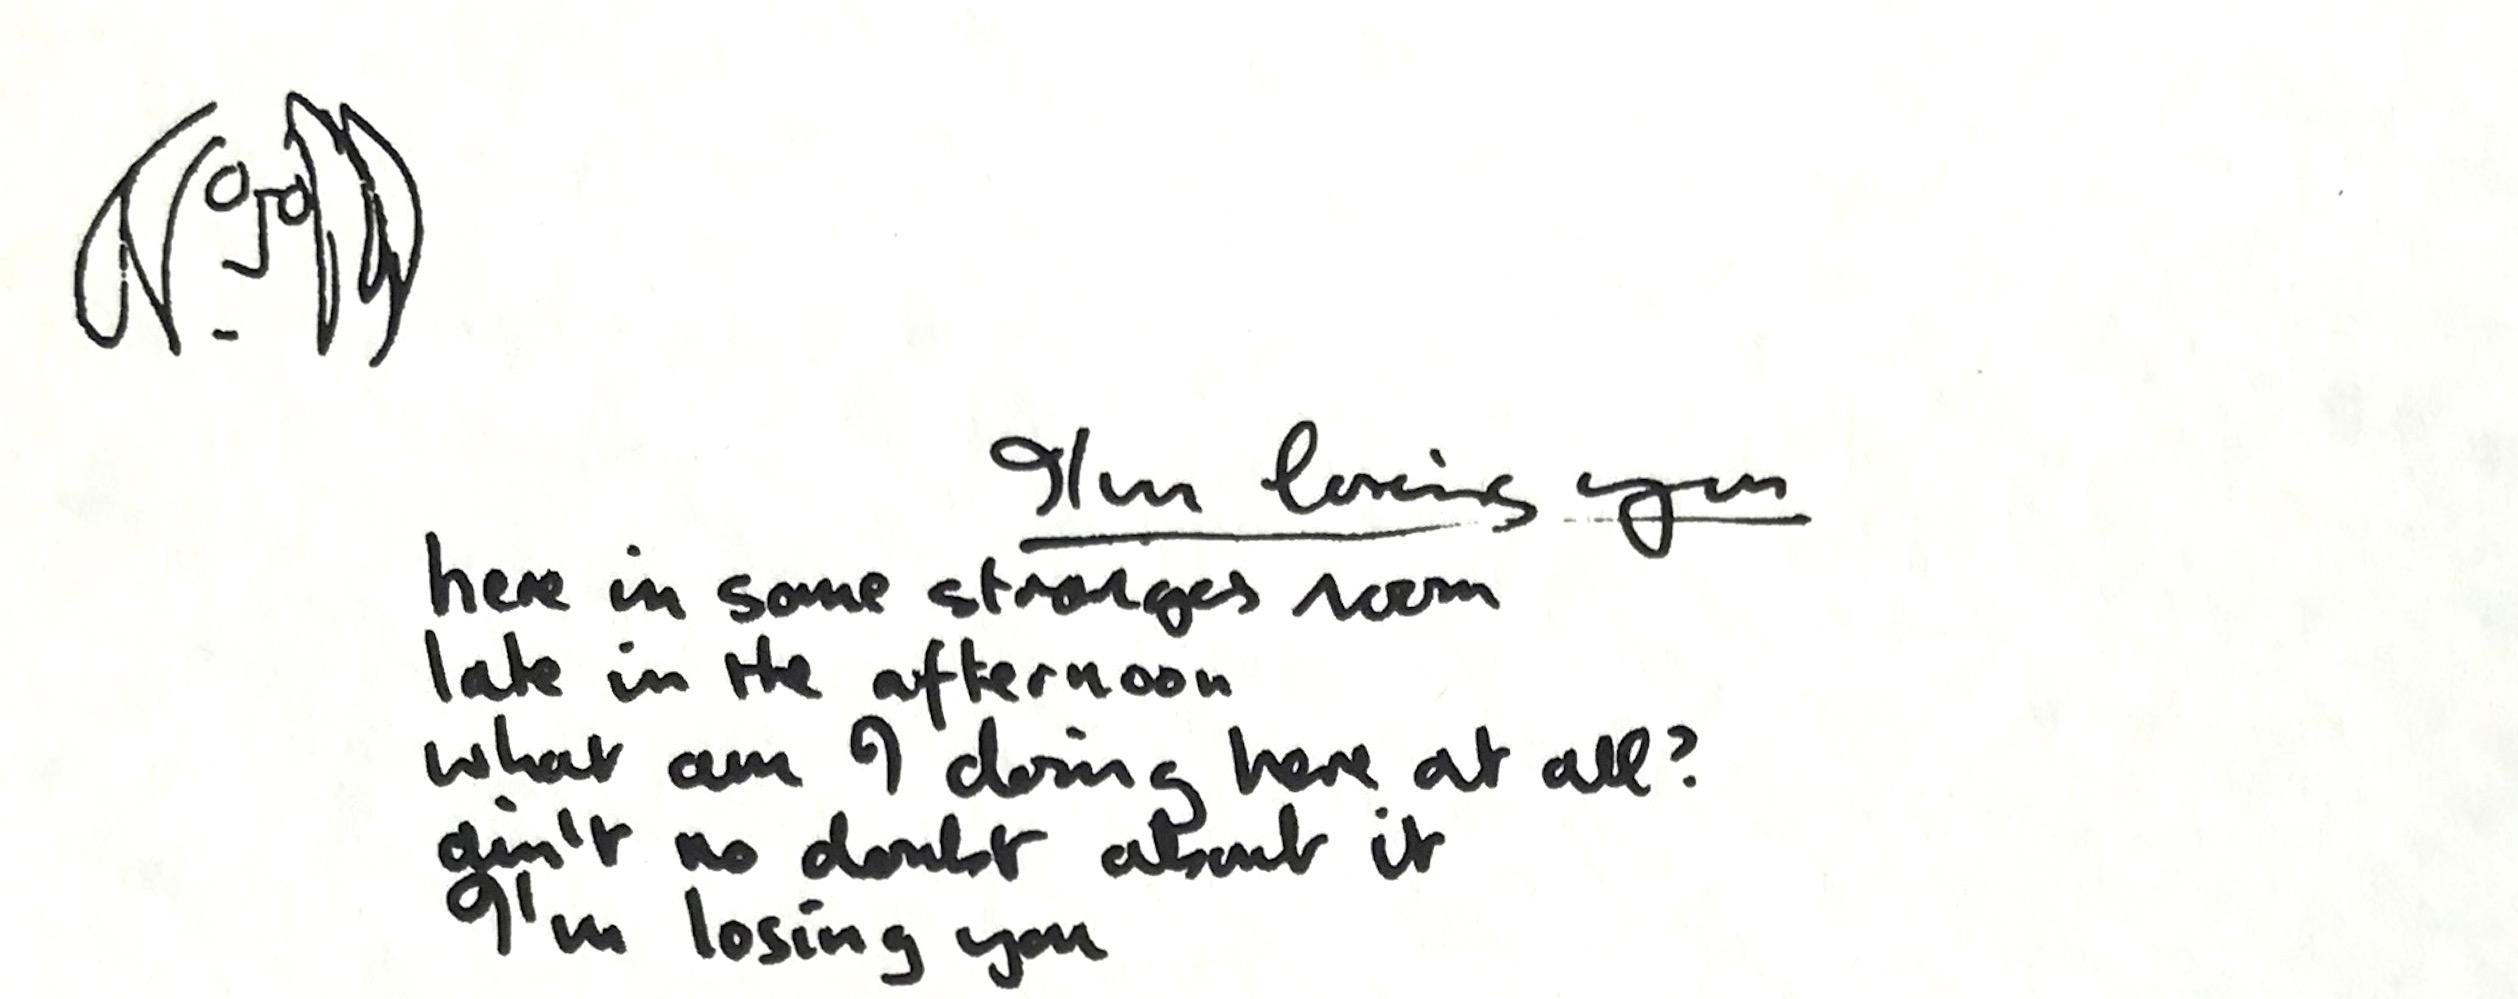  Rare Limited Edition Serigraph of John Lennon's handwritten lyrics for the song 